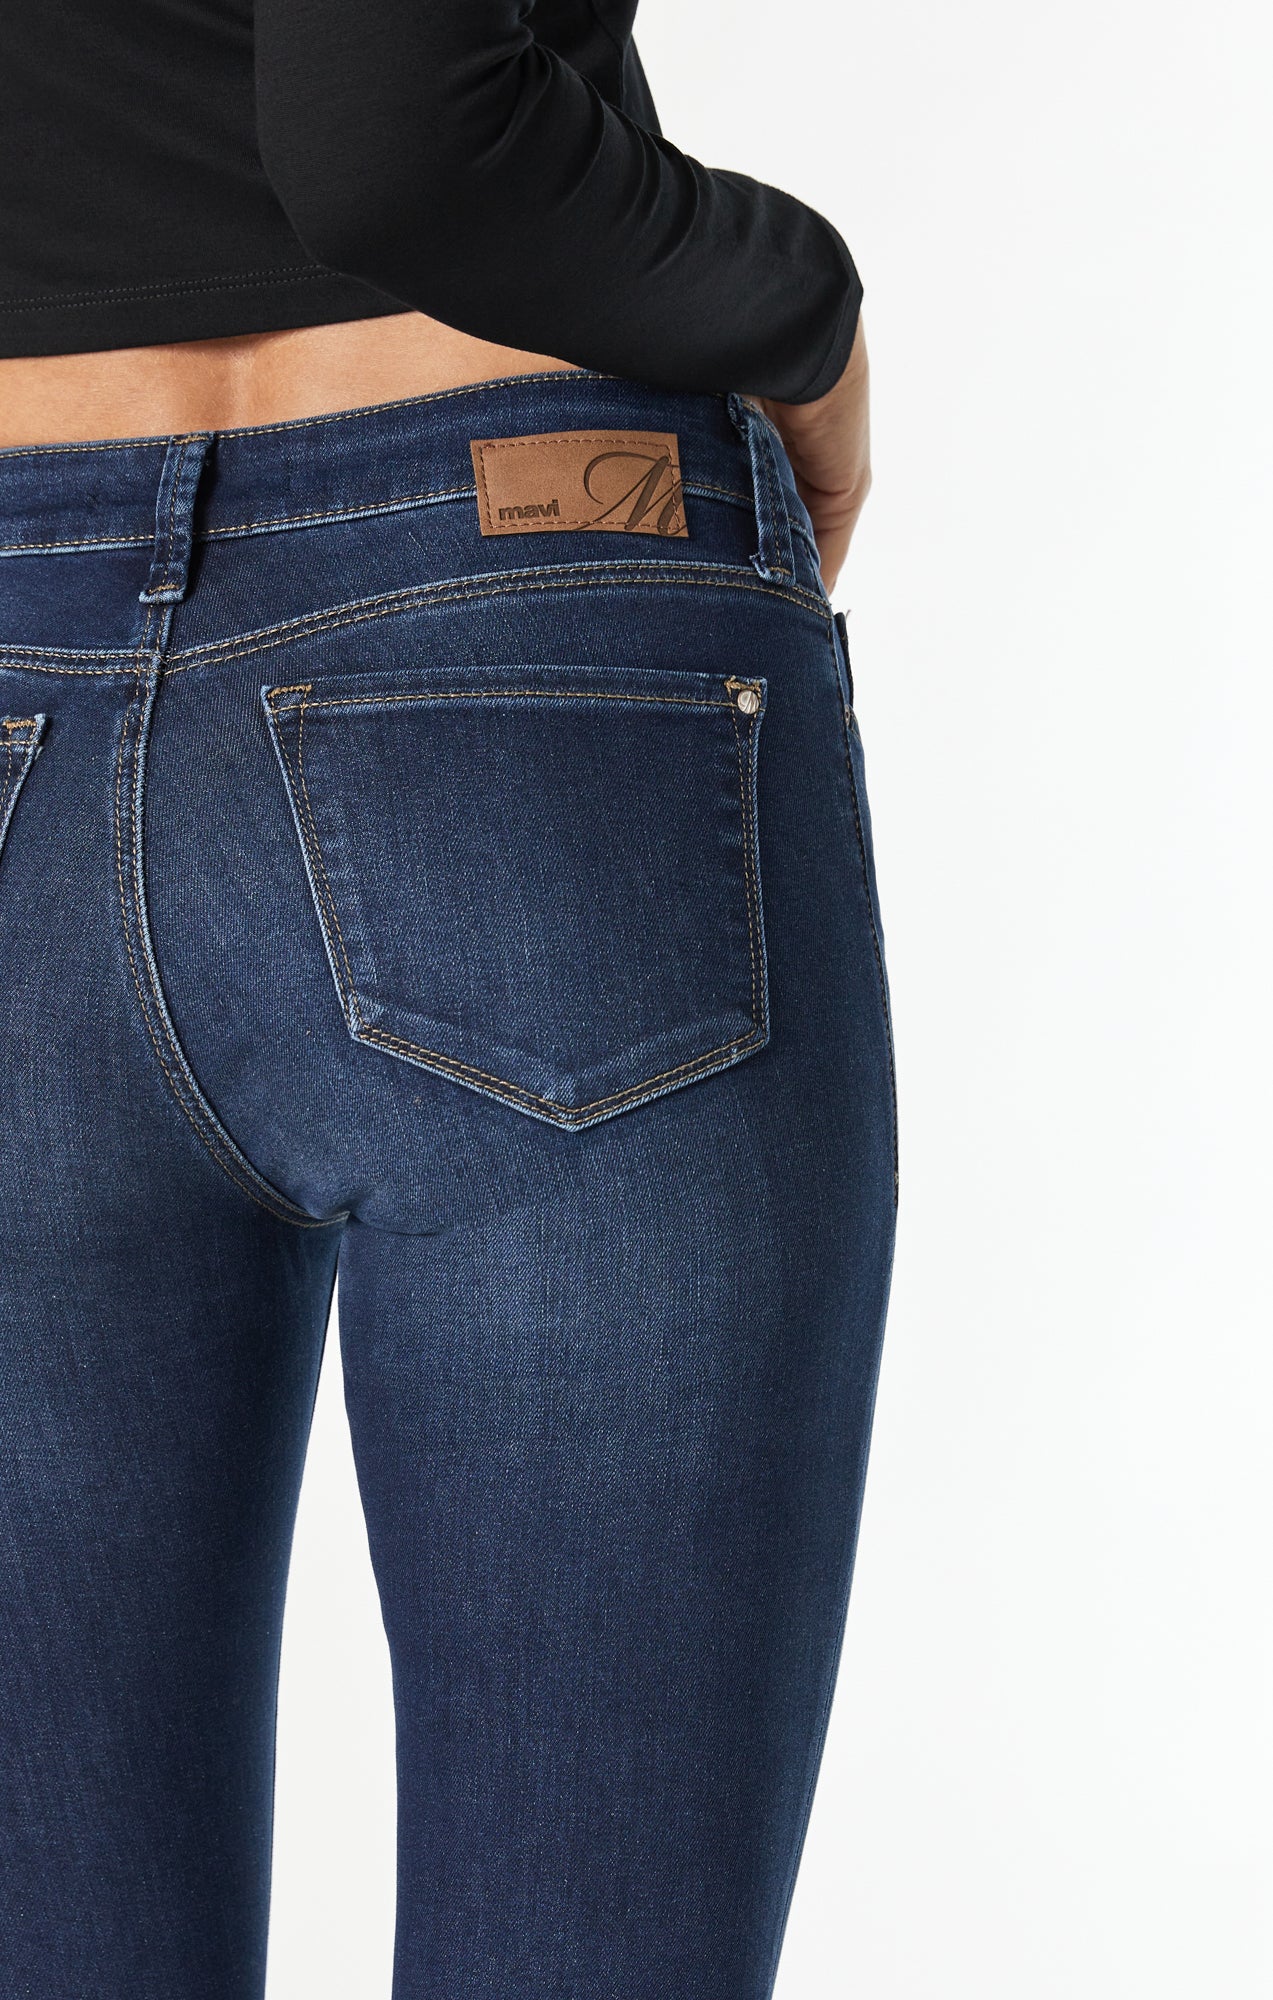 Mavi Women's Adriana Mid Rise Super Skinny Jeans in Indigo Tribeca